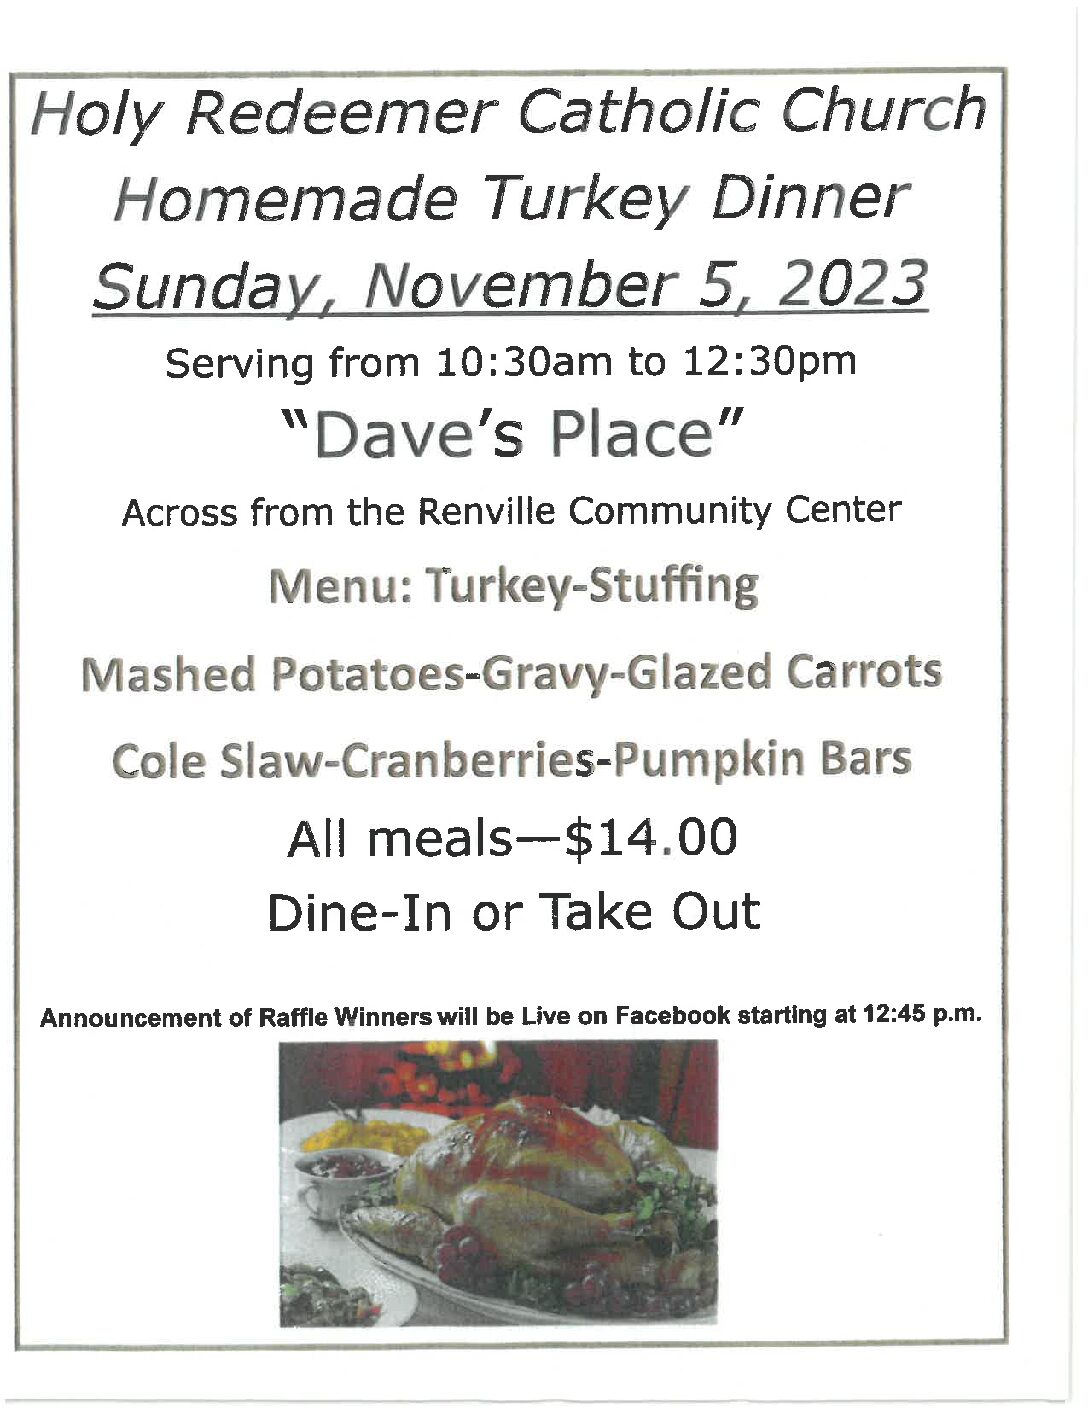 <h1 class="tribe-events-single-event-title">Holy Redeemer Catholic Church Homemade Turkey Dinner</h1>